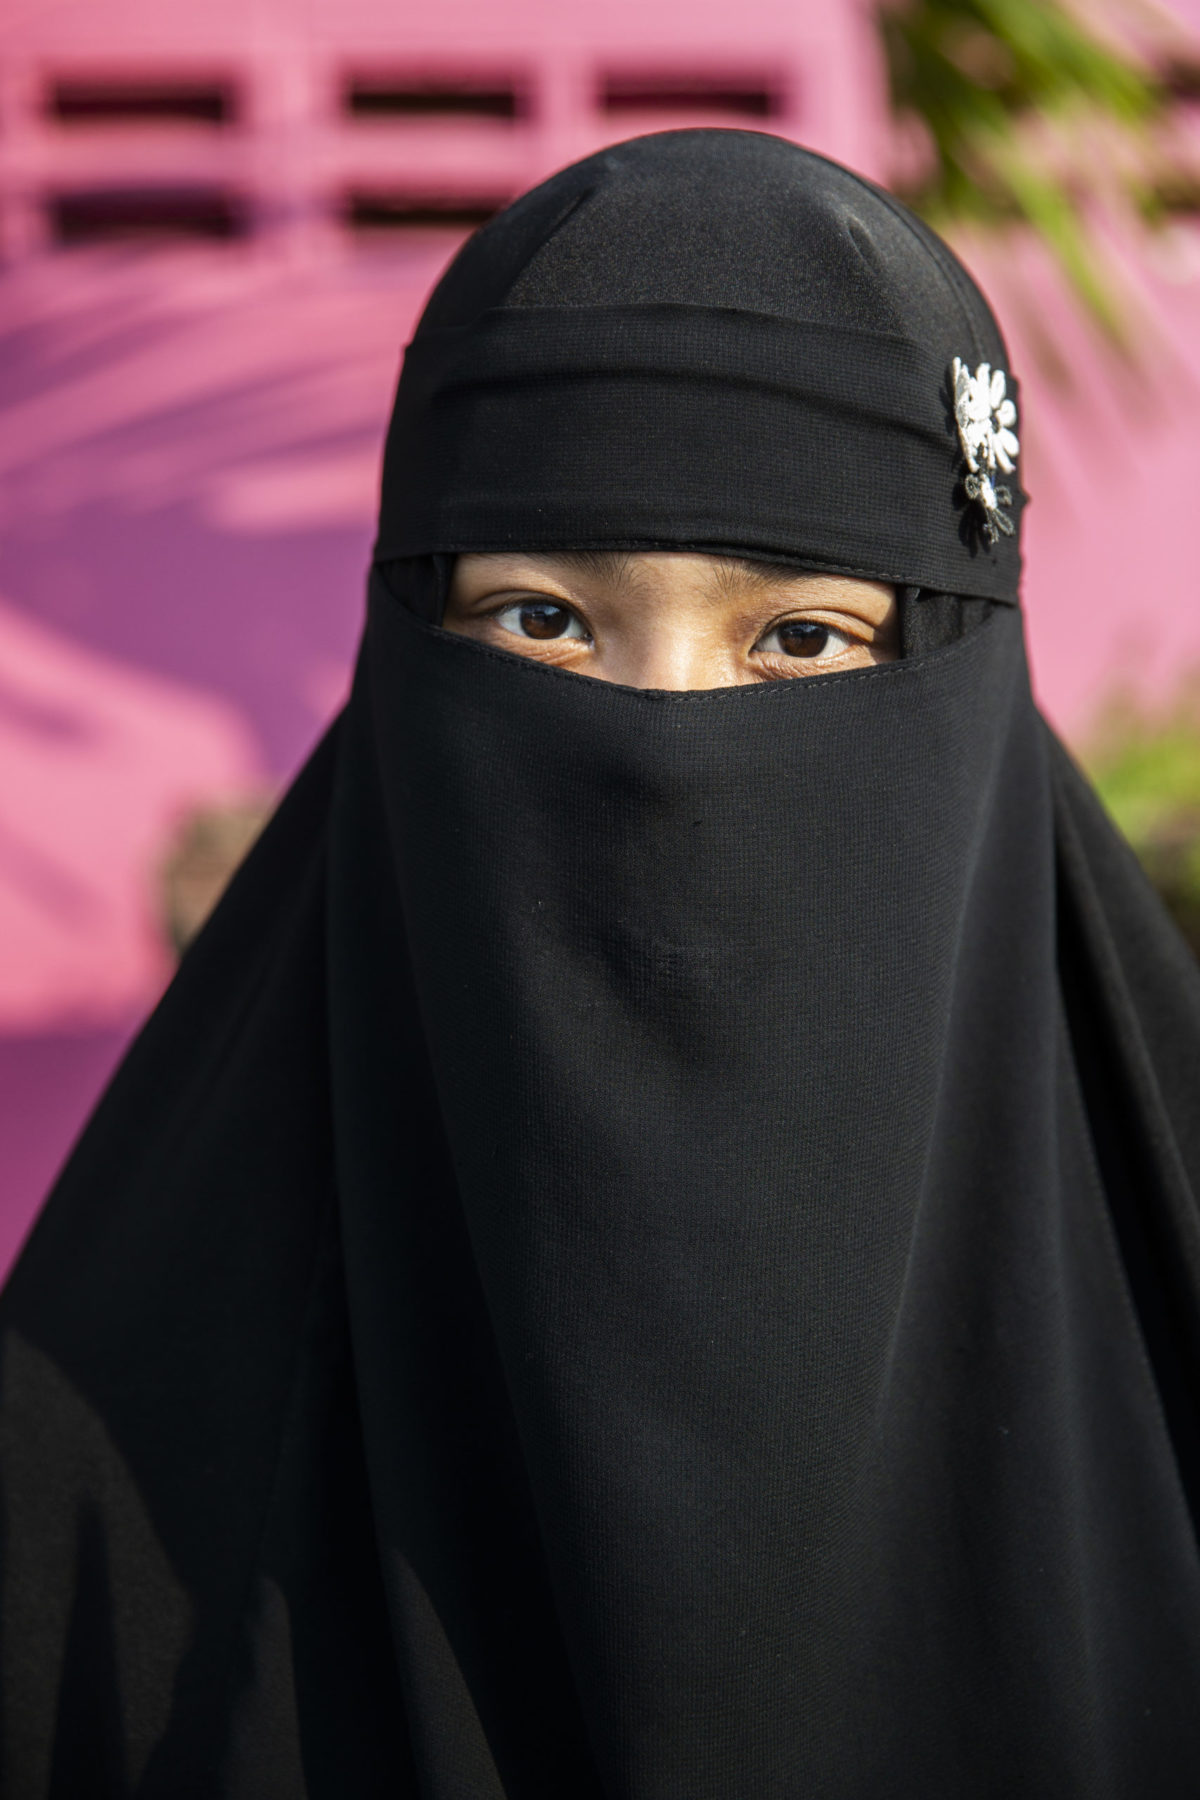 A person wearing a black burka.